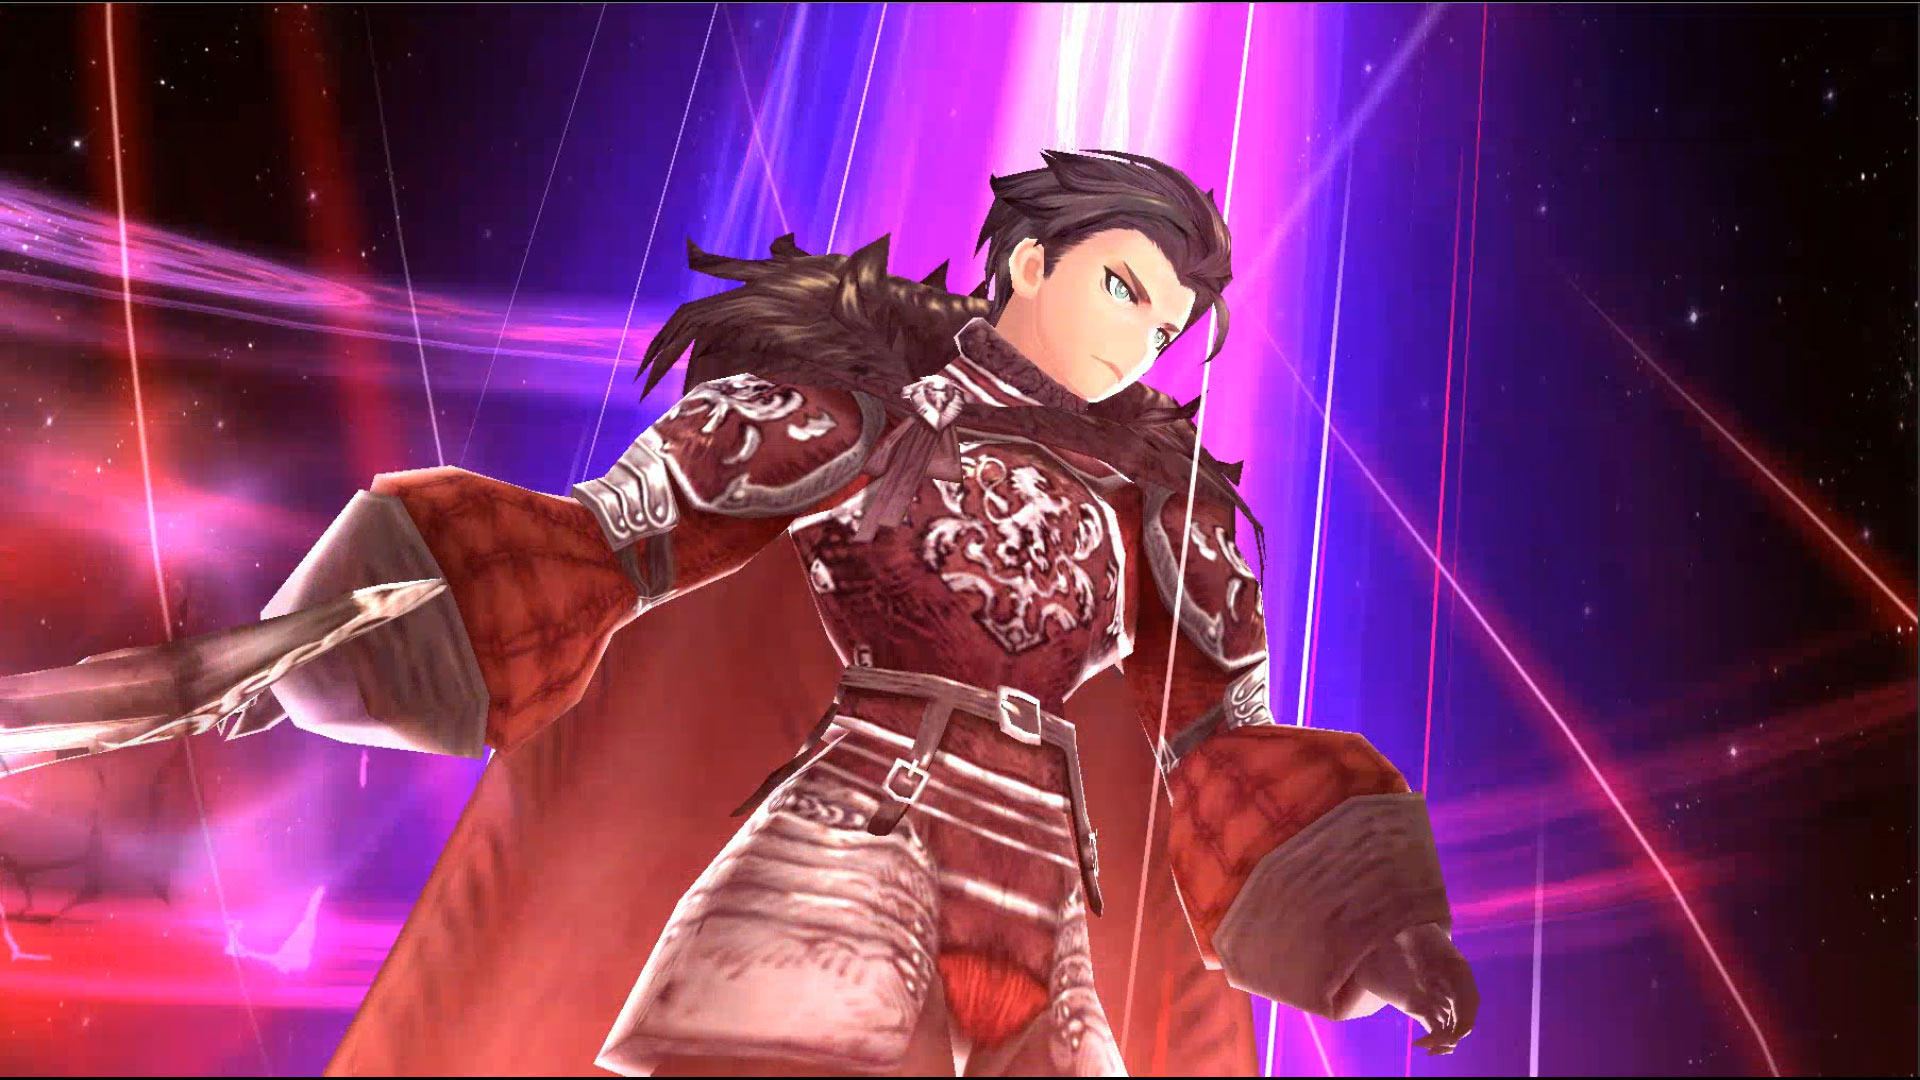 Beste mobile strategispill: War of the Visions: Final Fantasy Brave Exvius. Bildet viser en mann med mørkt hår som står i en lysstråle